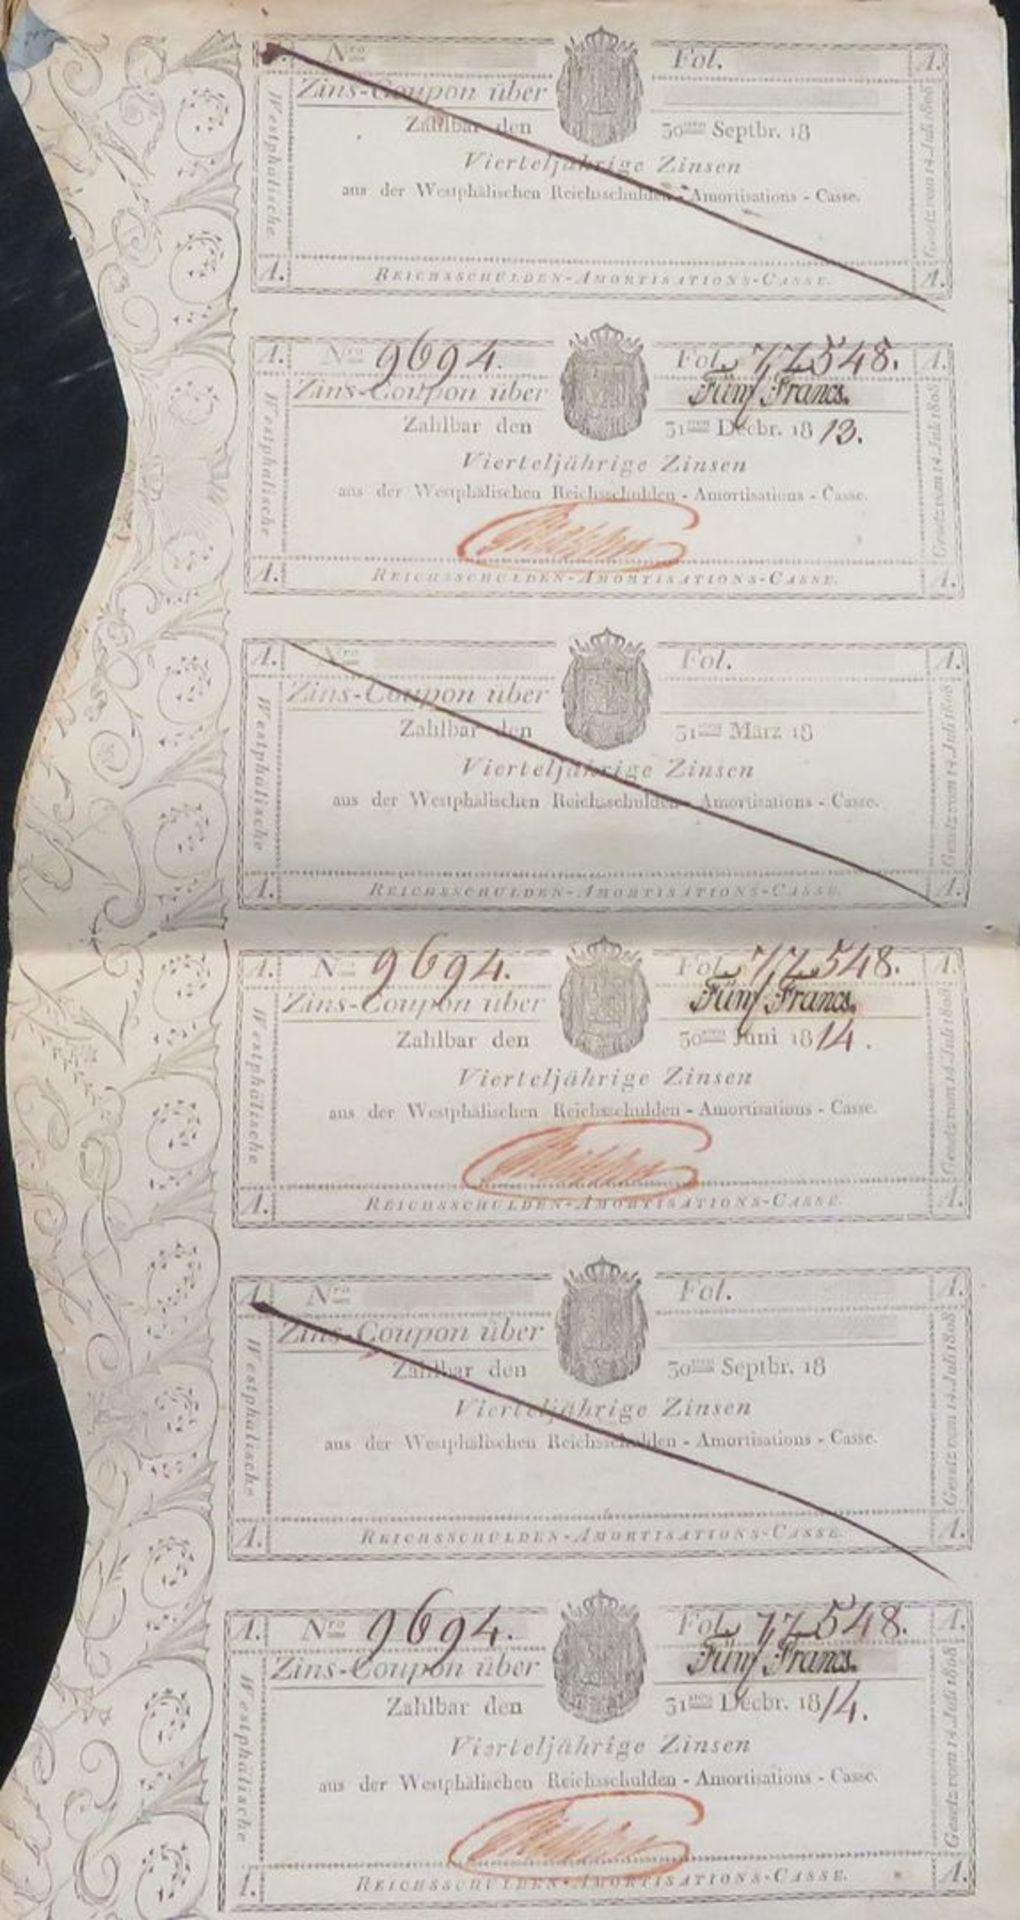 Obligation des Königreichs Westphalen über 200 Franken inkl. 5 1/2 Blatt Zinscoupons. - Image 2 of 3